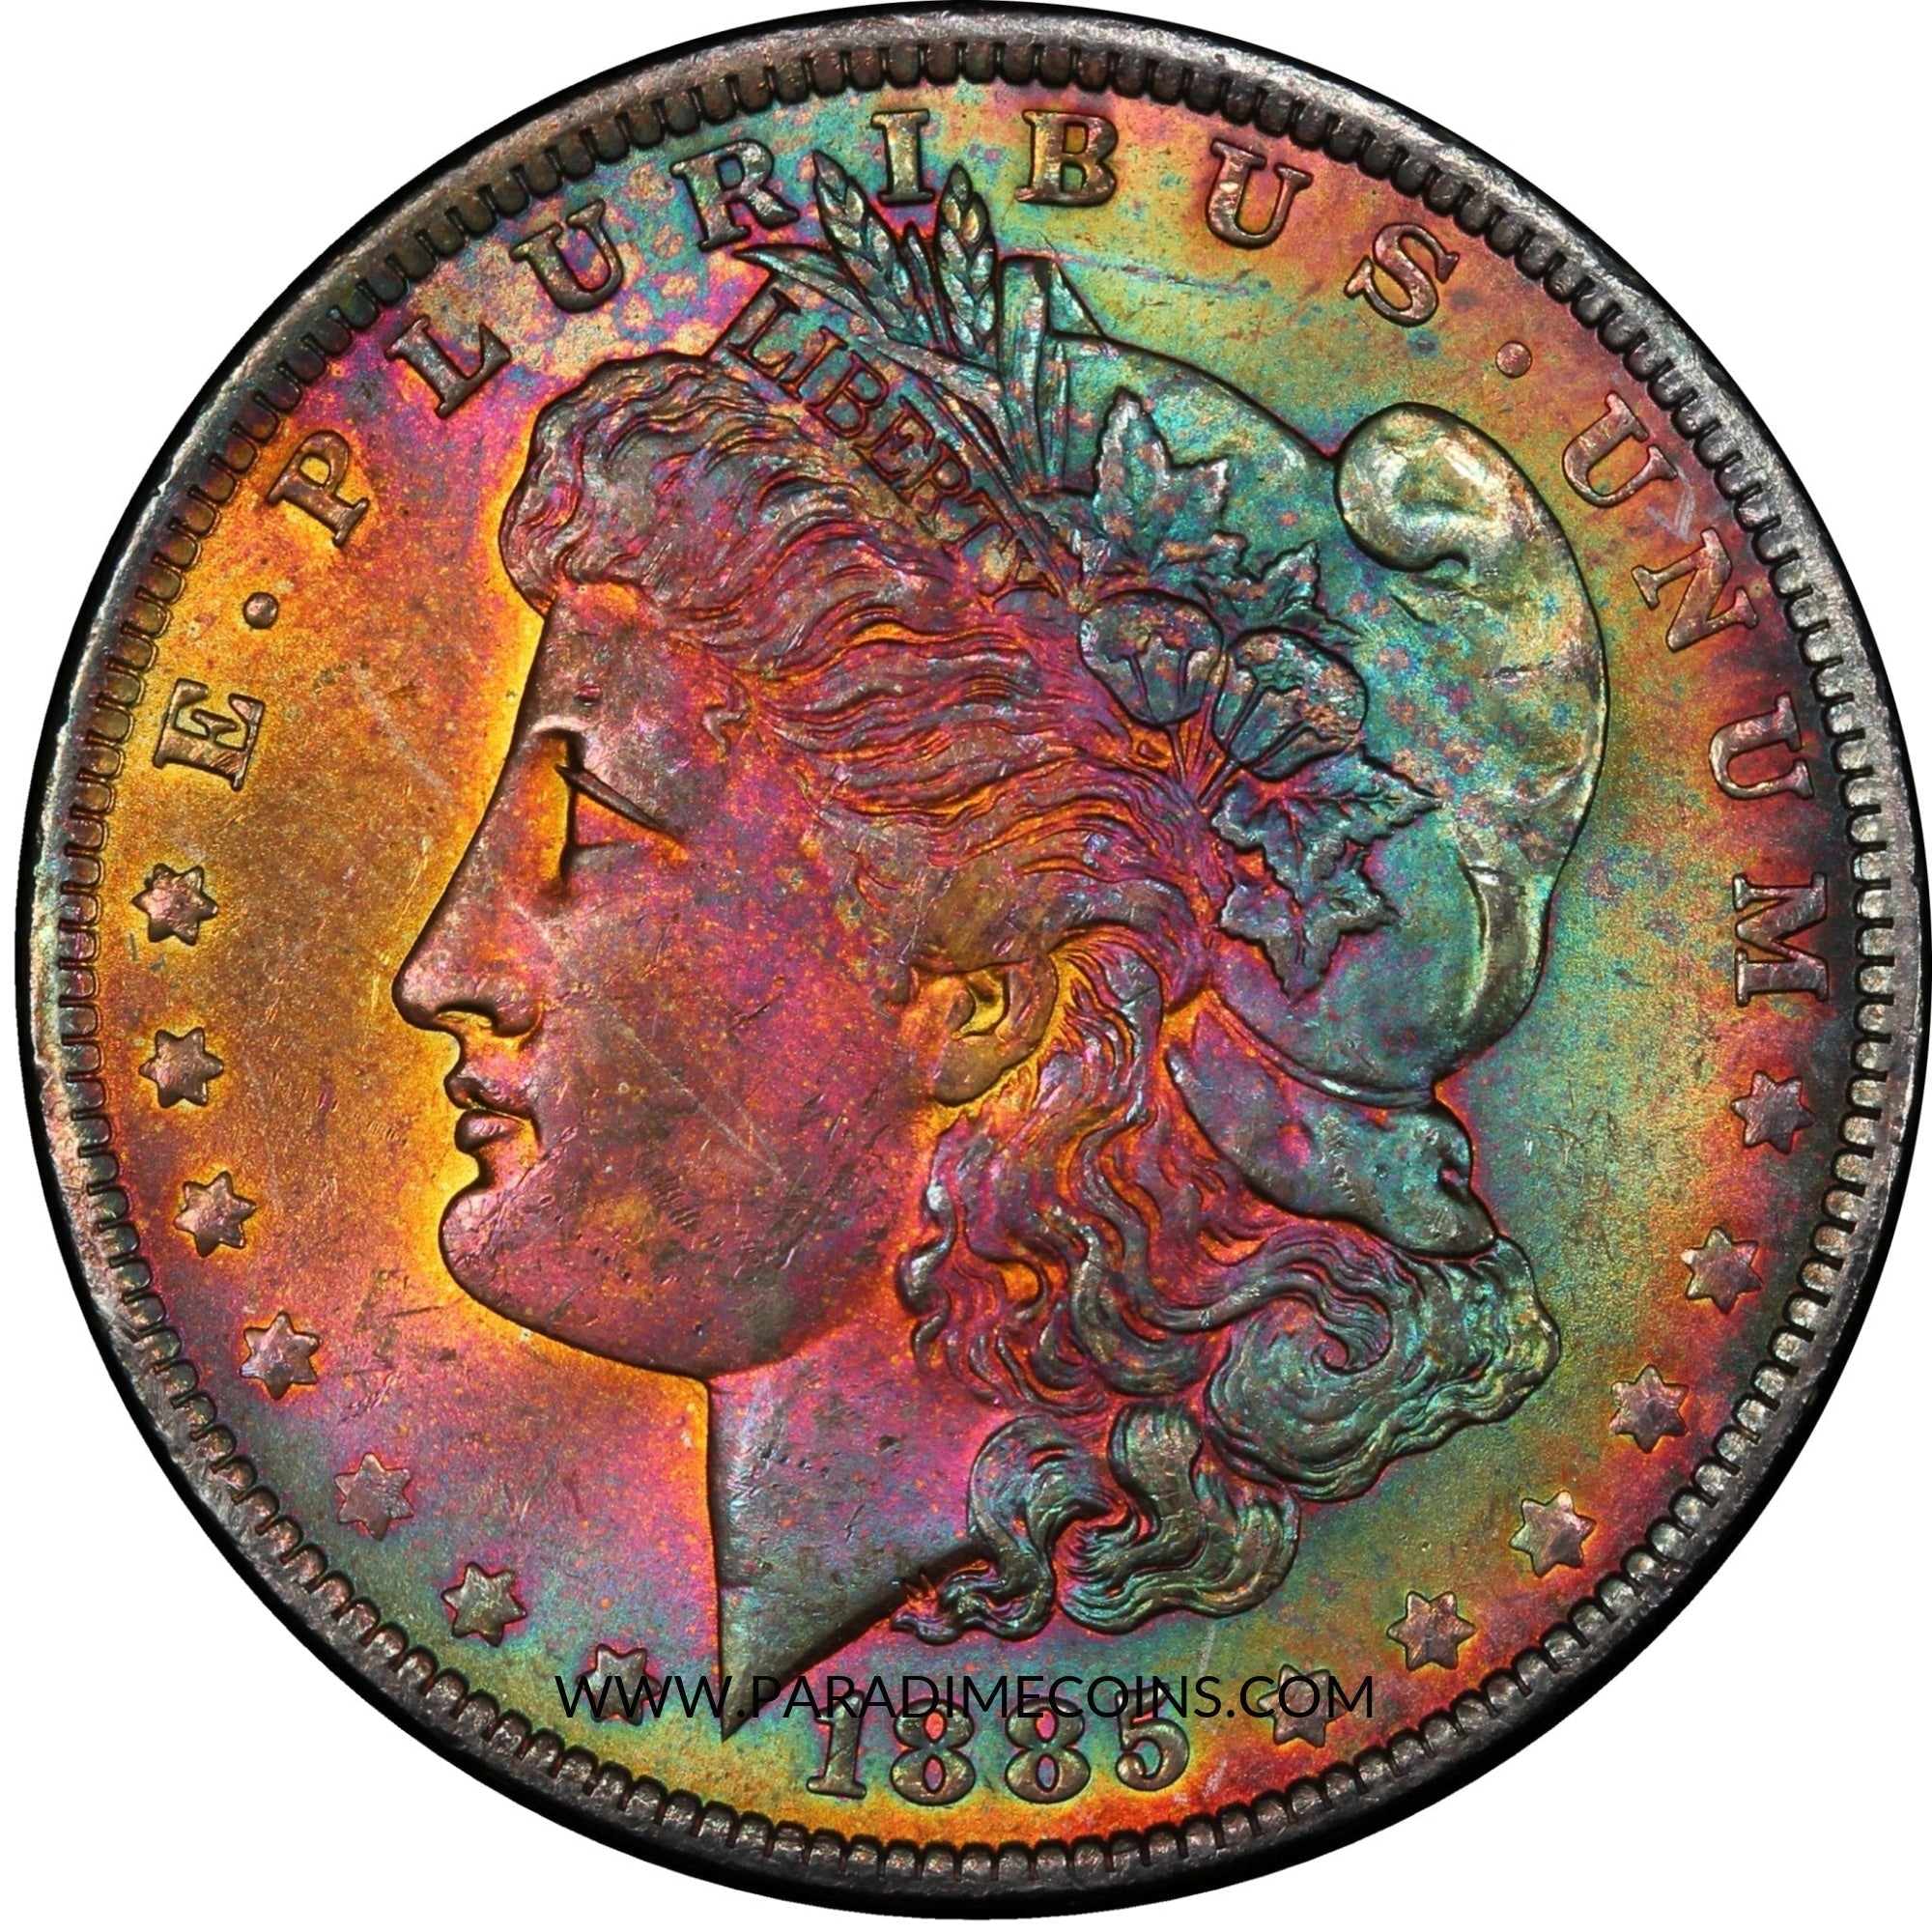 1885-O $1 MS64 PCGS - Paradime Coins | PCGS NGC CACG CAC Rare US Numismatic Coins For Sale